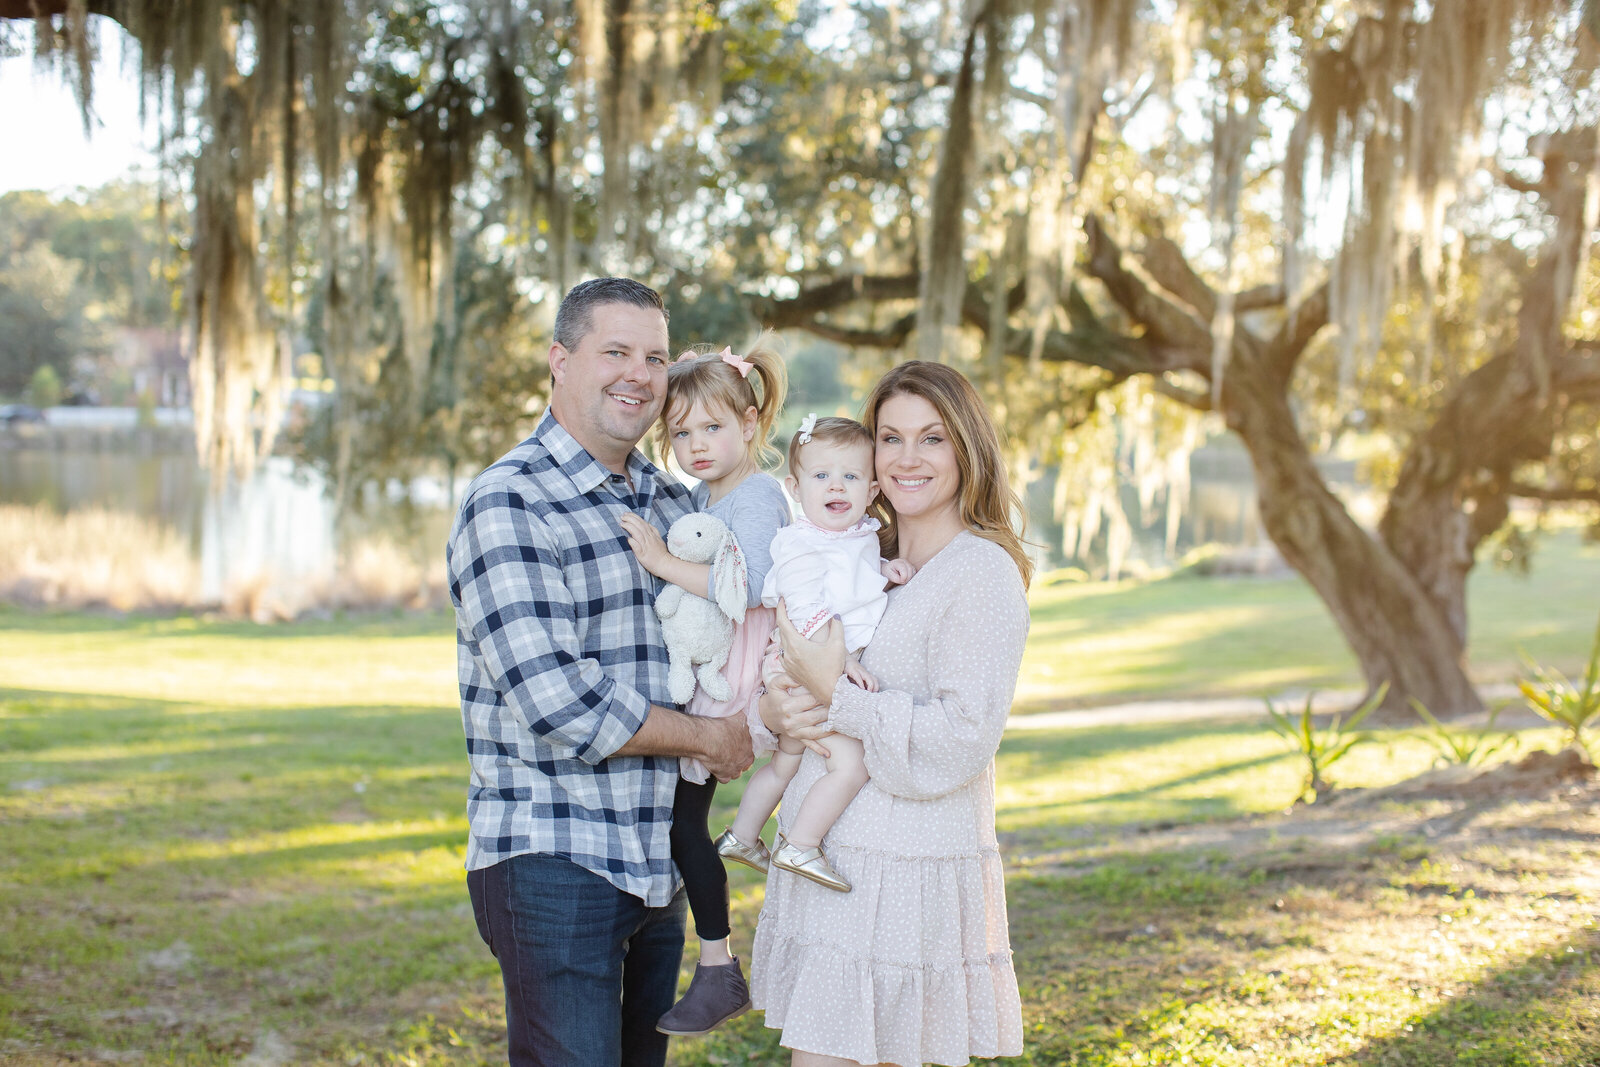 Family portrait photographer in Orlando Florida RJP.